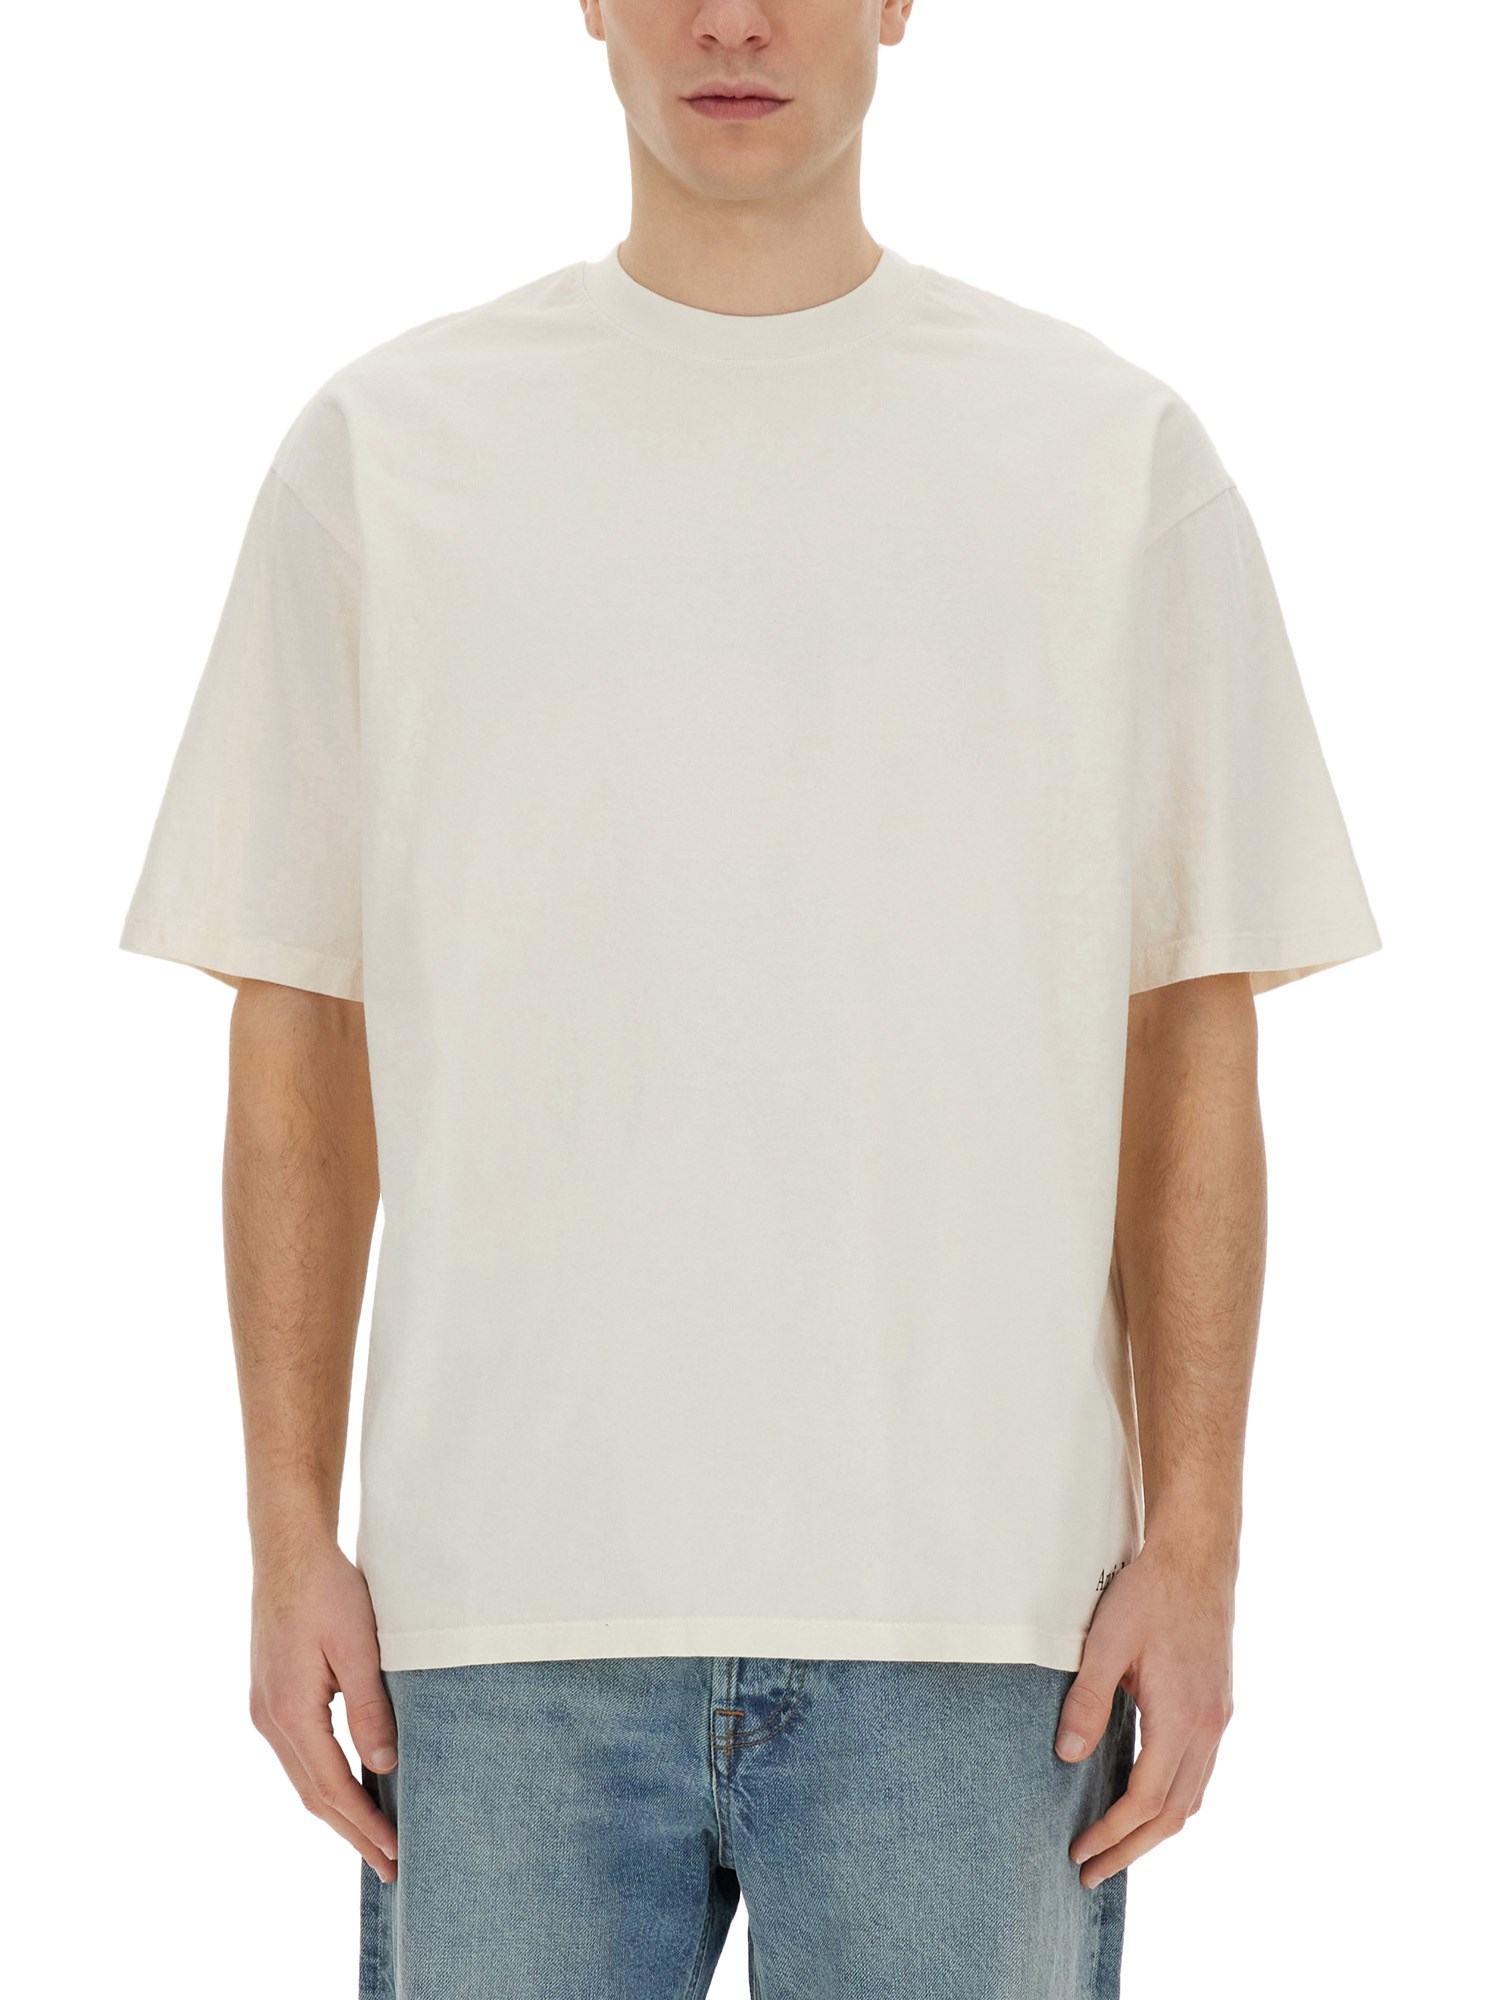 Amish amish cotton t-shirt